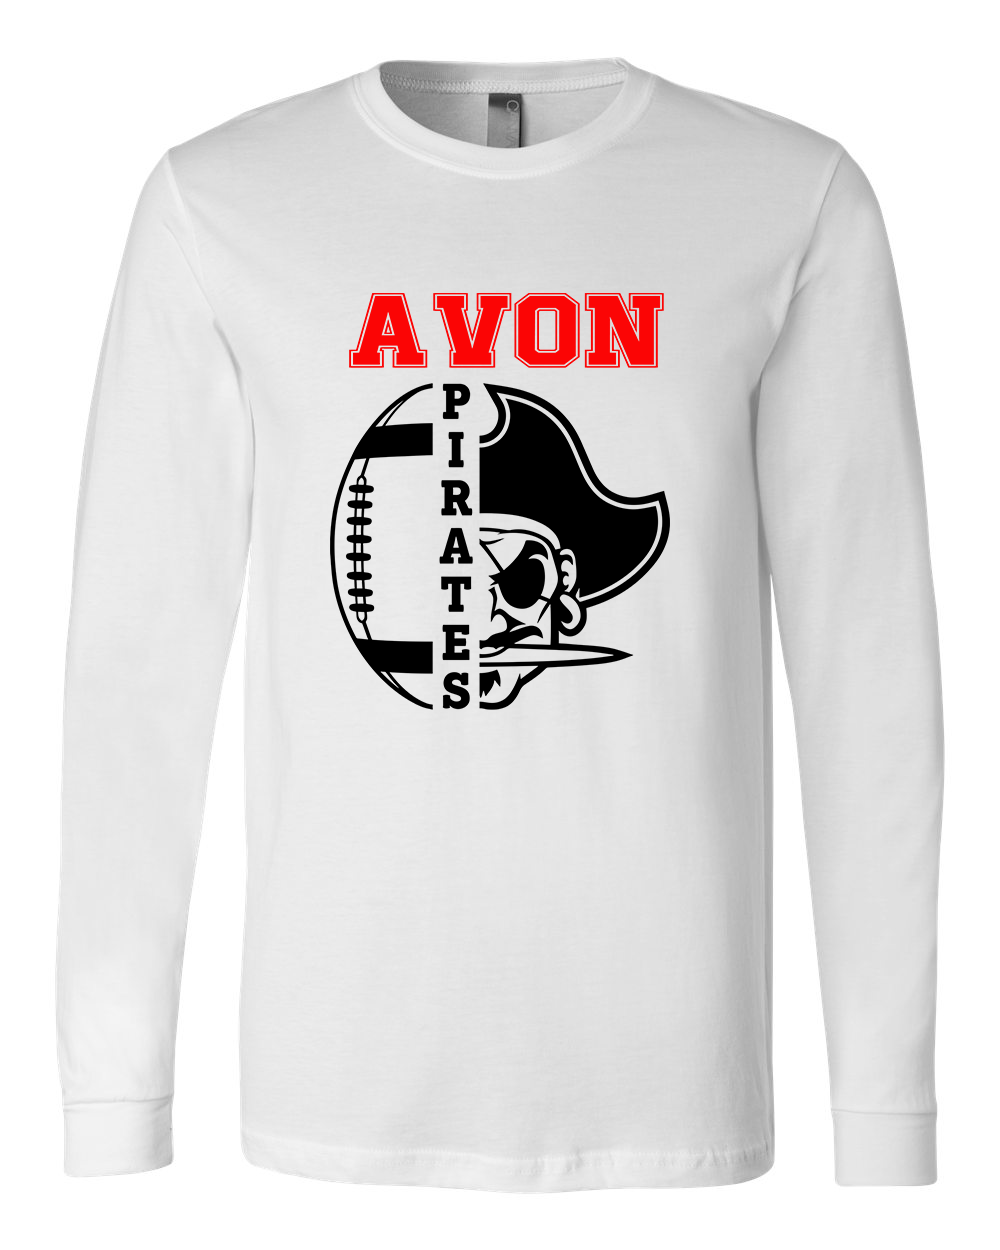 Avon Pirate Football Long Sleeve Unisex Adult T-Shirt